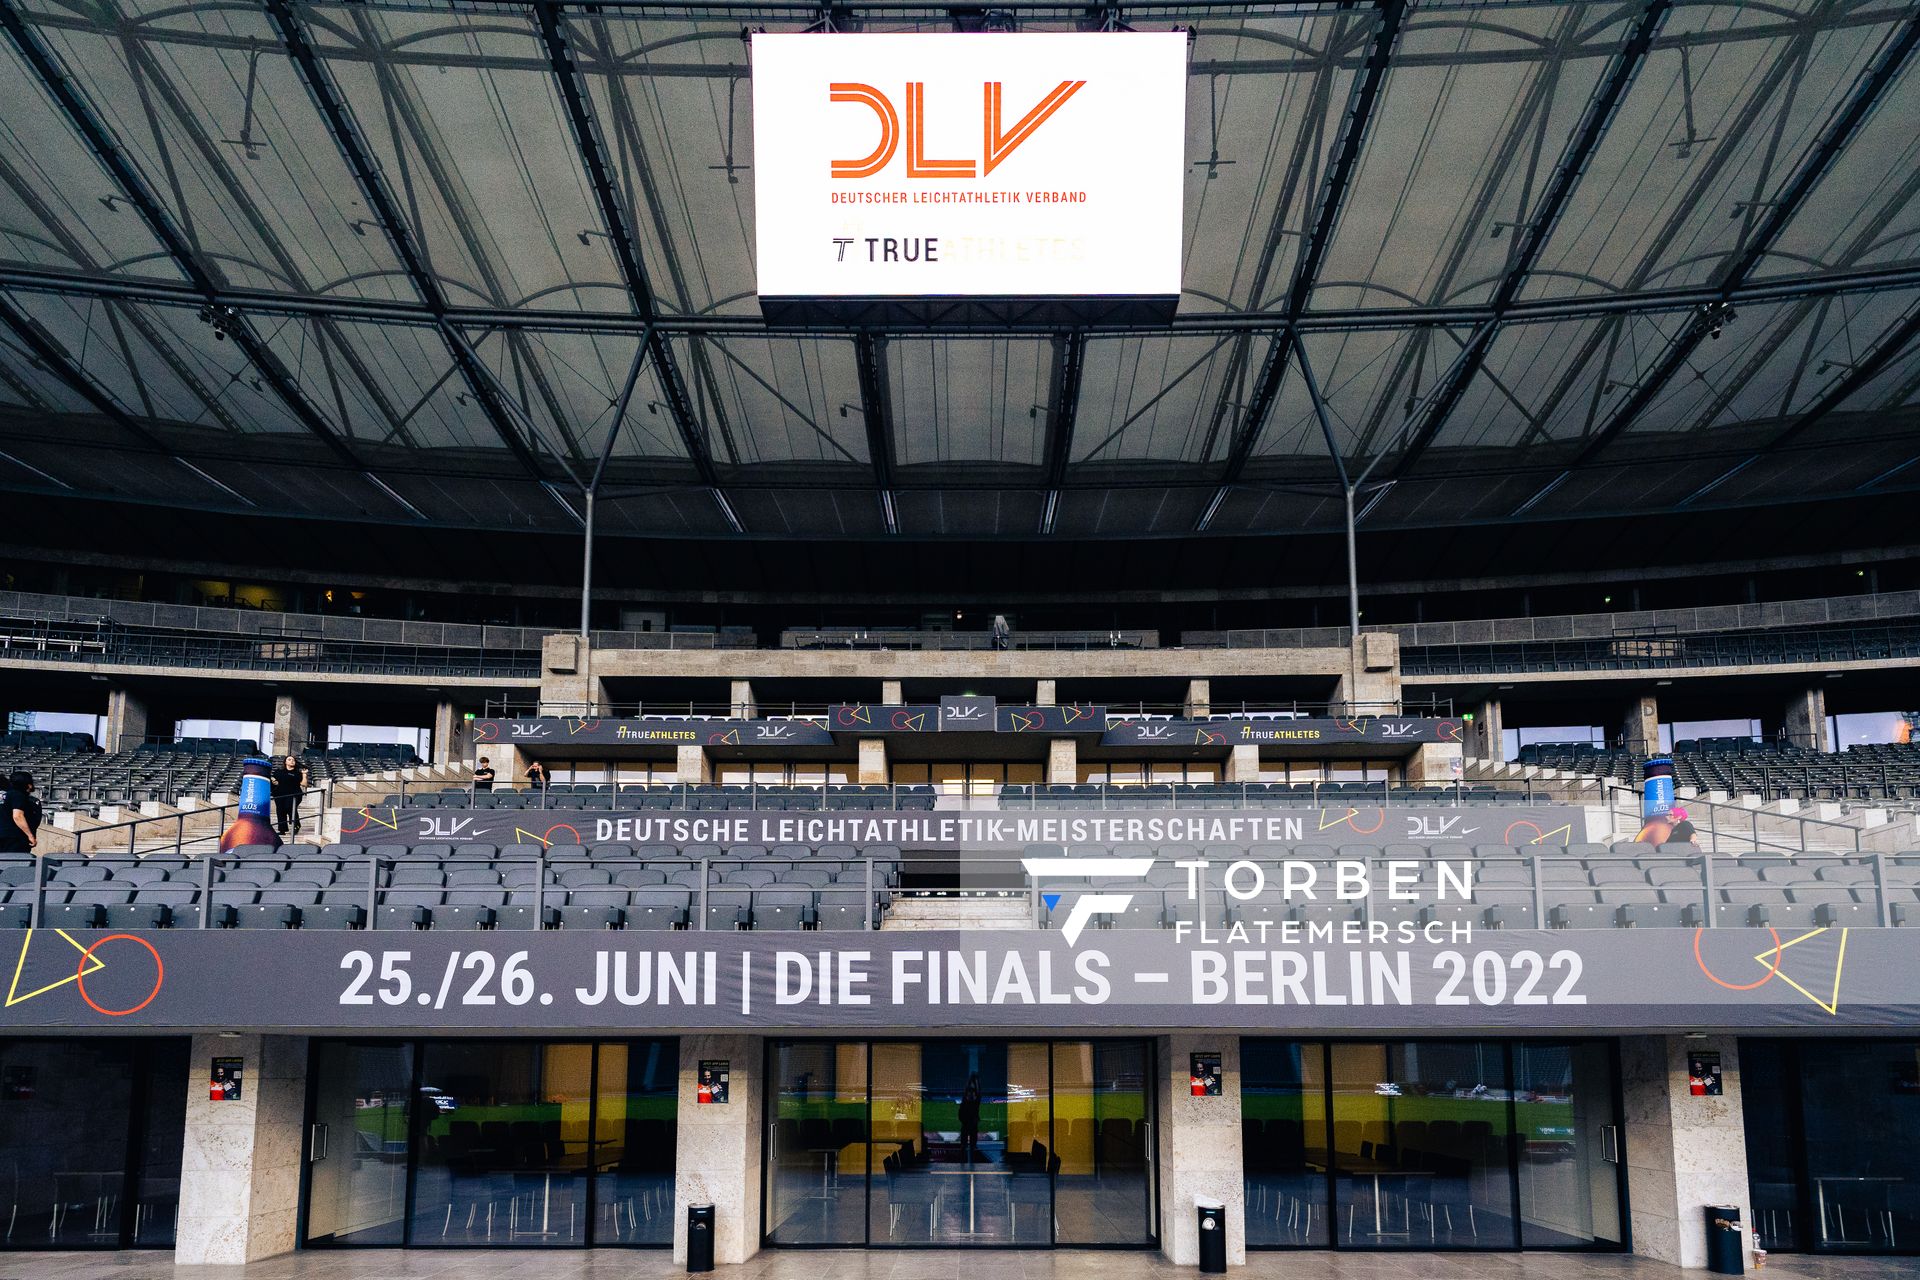 Die Finals - Berlin 2022 | Deutsche Meisterschaften im Olympiastadion am 25.06.2022 in Berlin